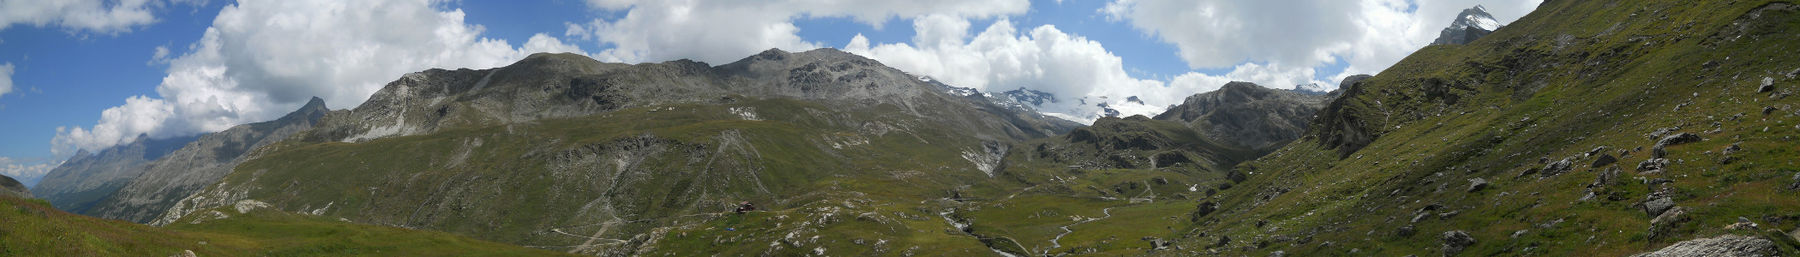 Val d'Aoste-Banner.JPG